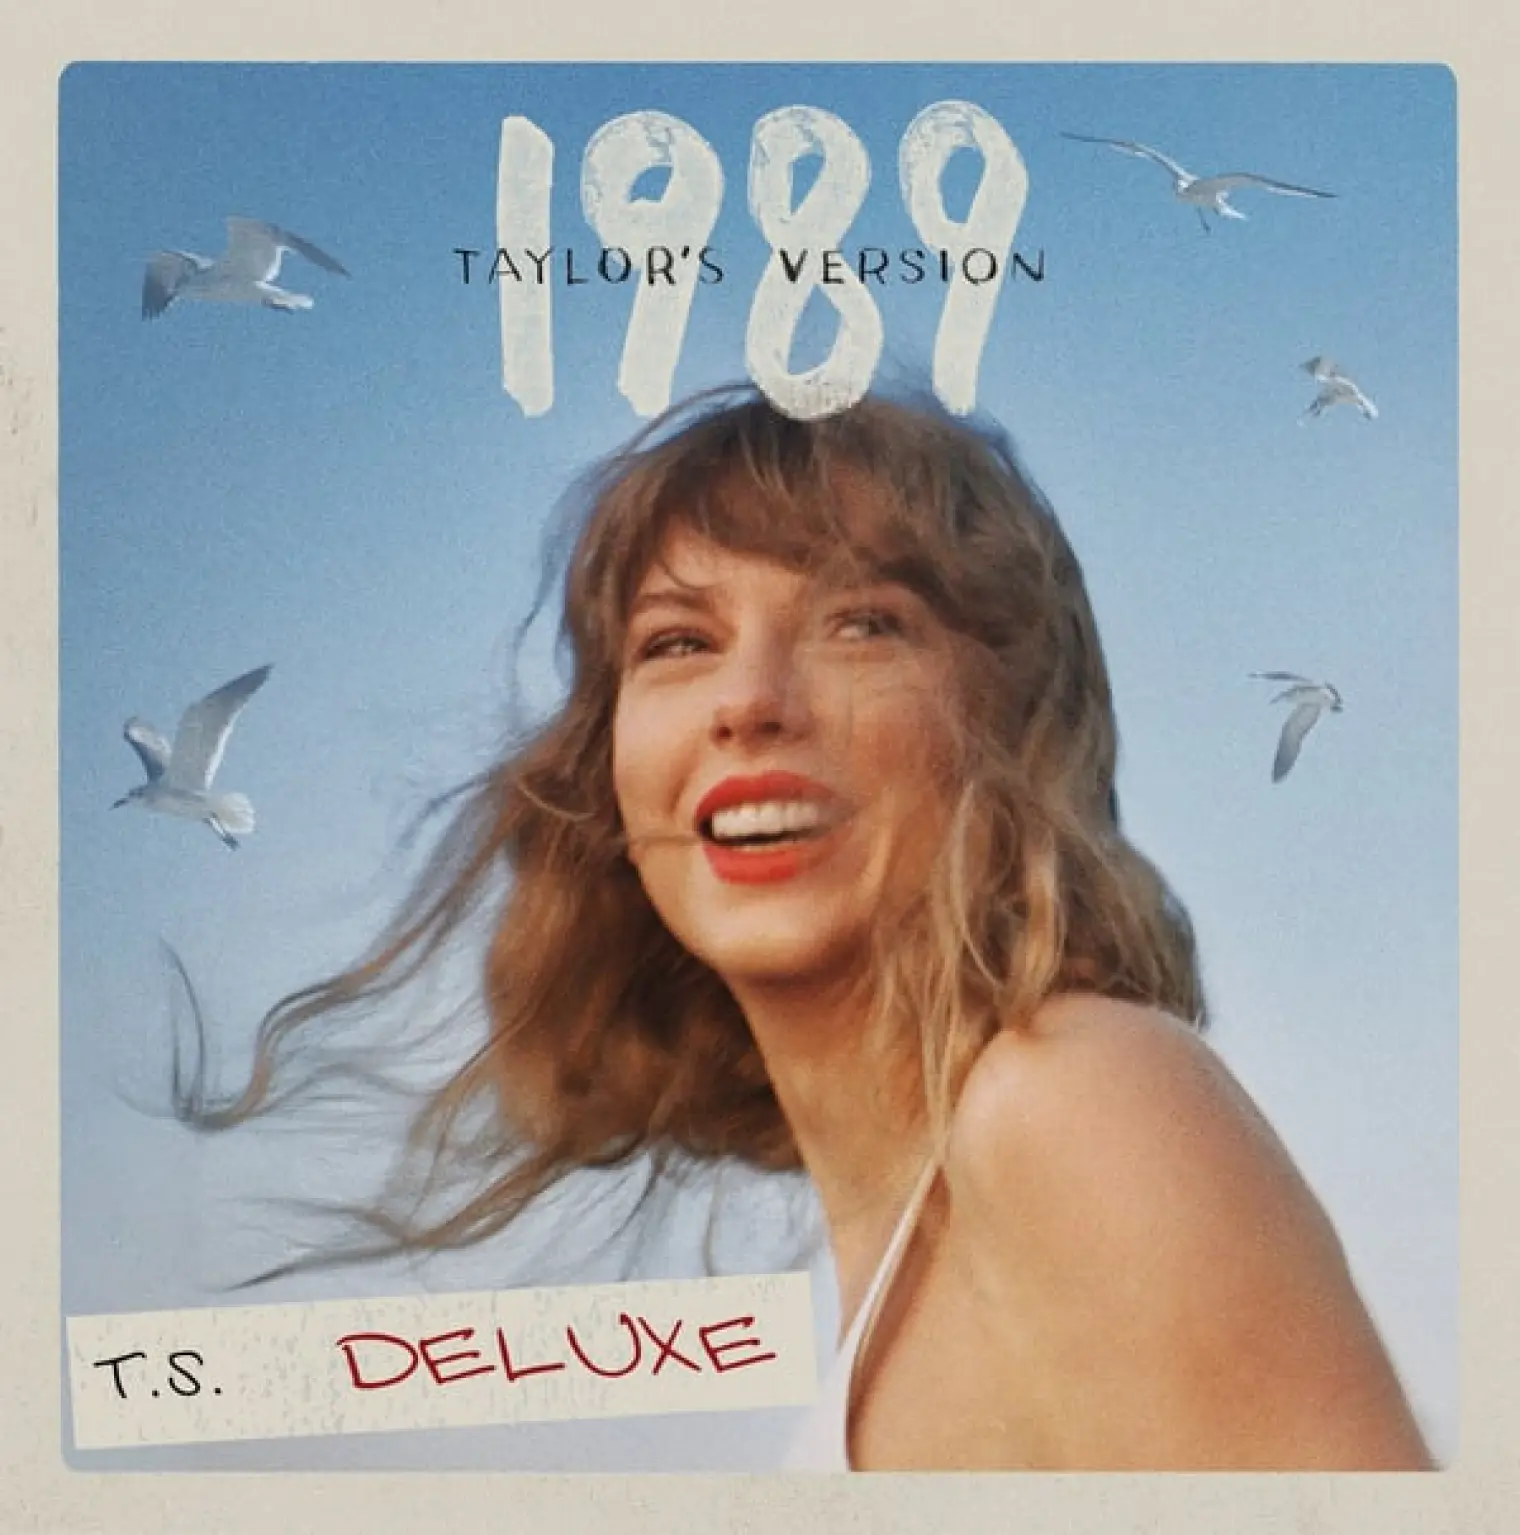 1989 (Taylor's Version) -  Taylor Swift 